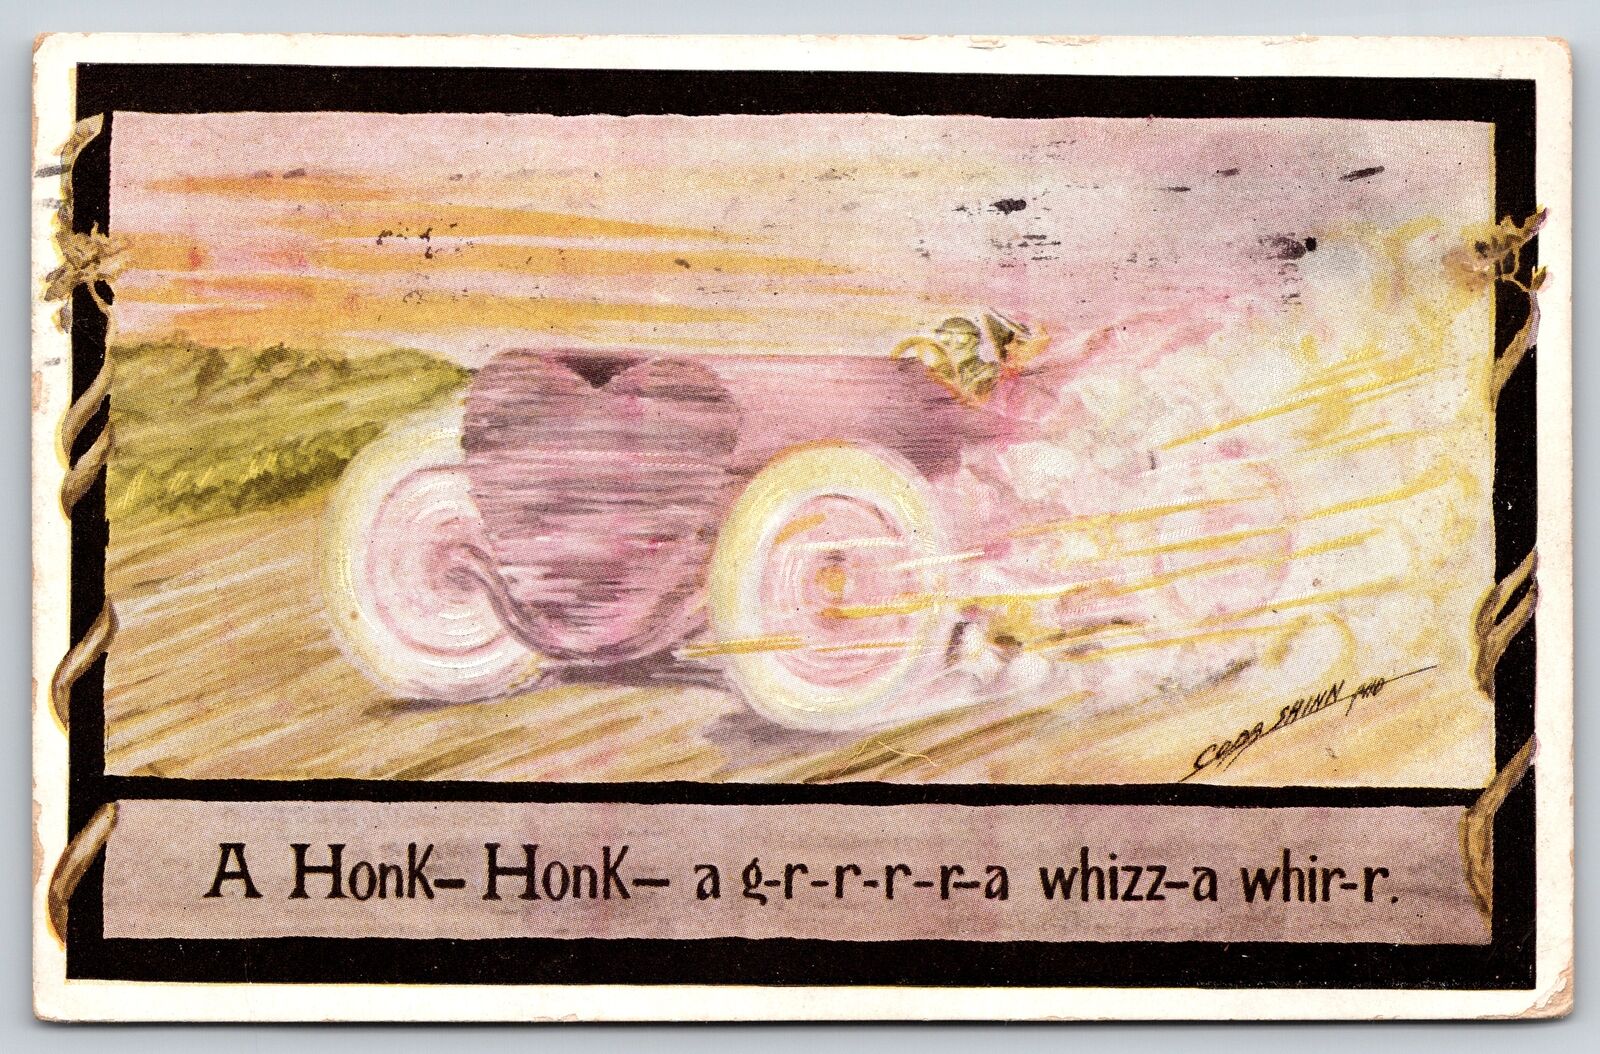 Artist Signed~Cobb Shinn~Car Races Down Road in Blurr of Dust~Honk Honk~PM 1911